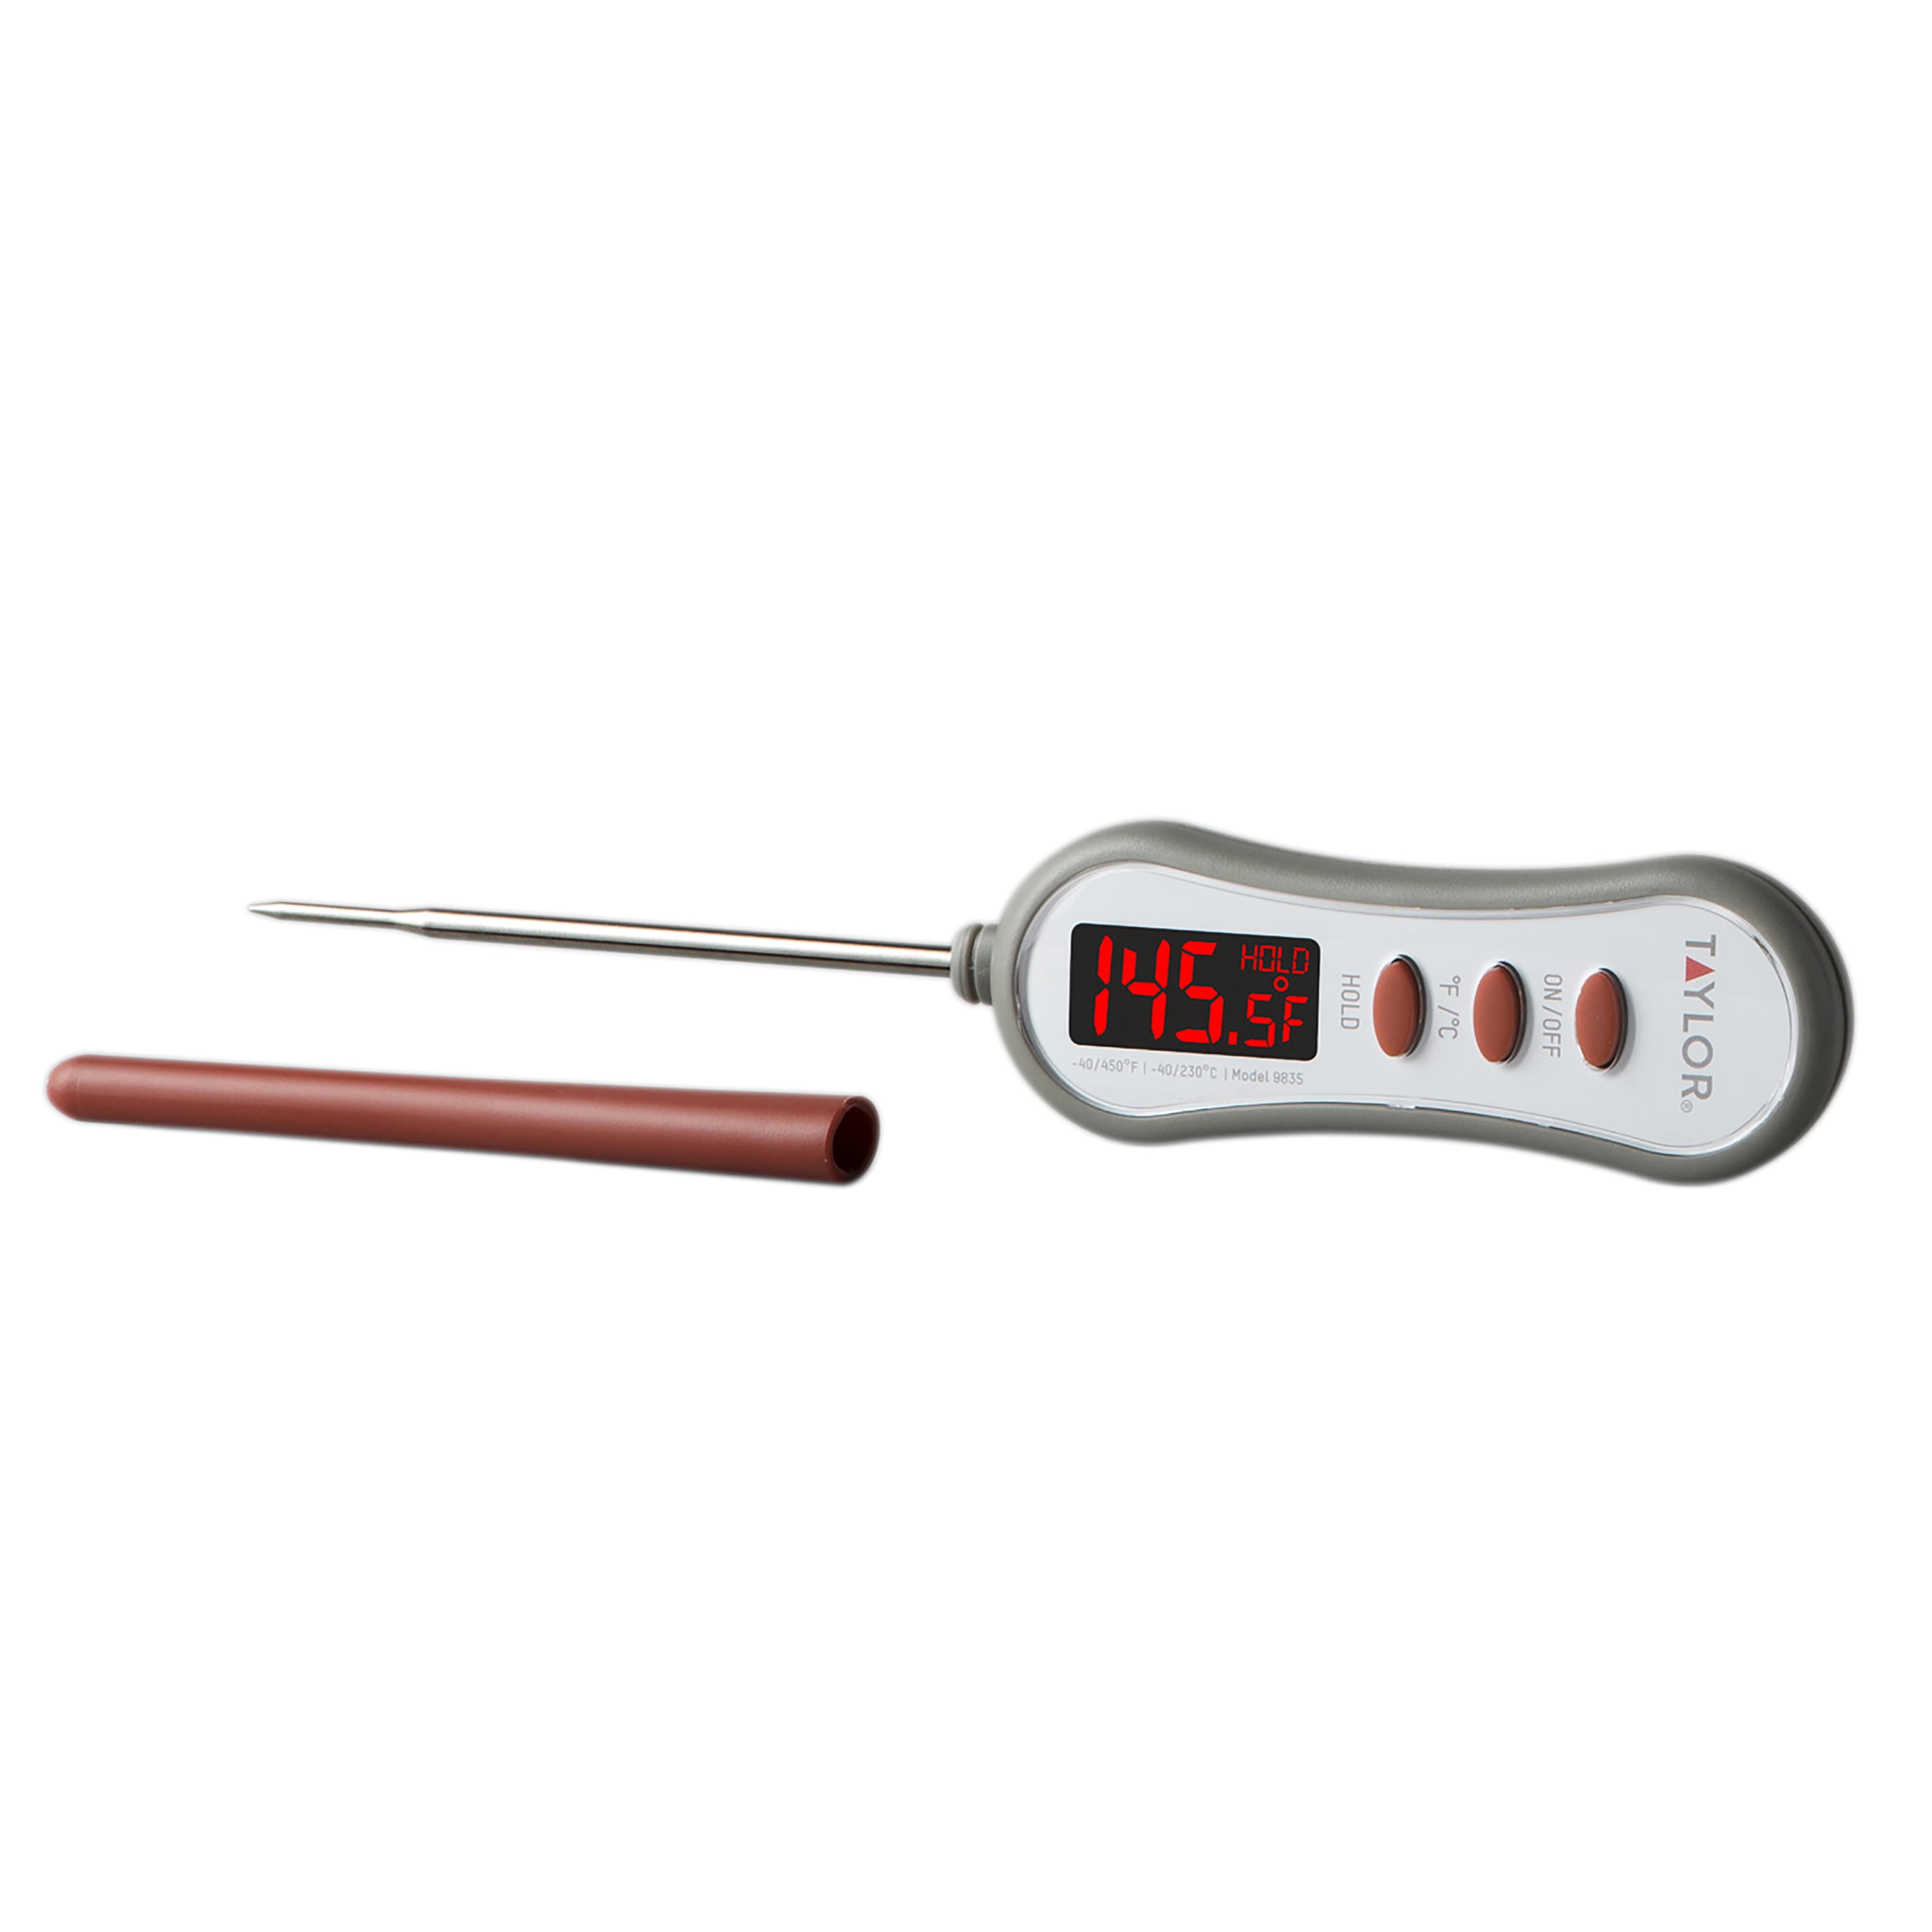 Taylor 9878EPR Advanced Digital Allergen-Free Thermometer